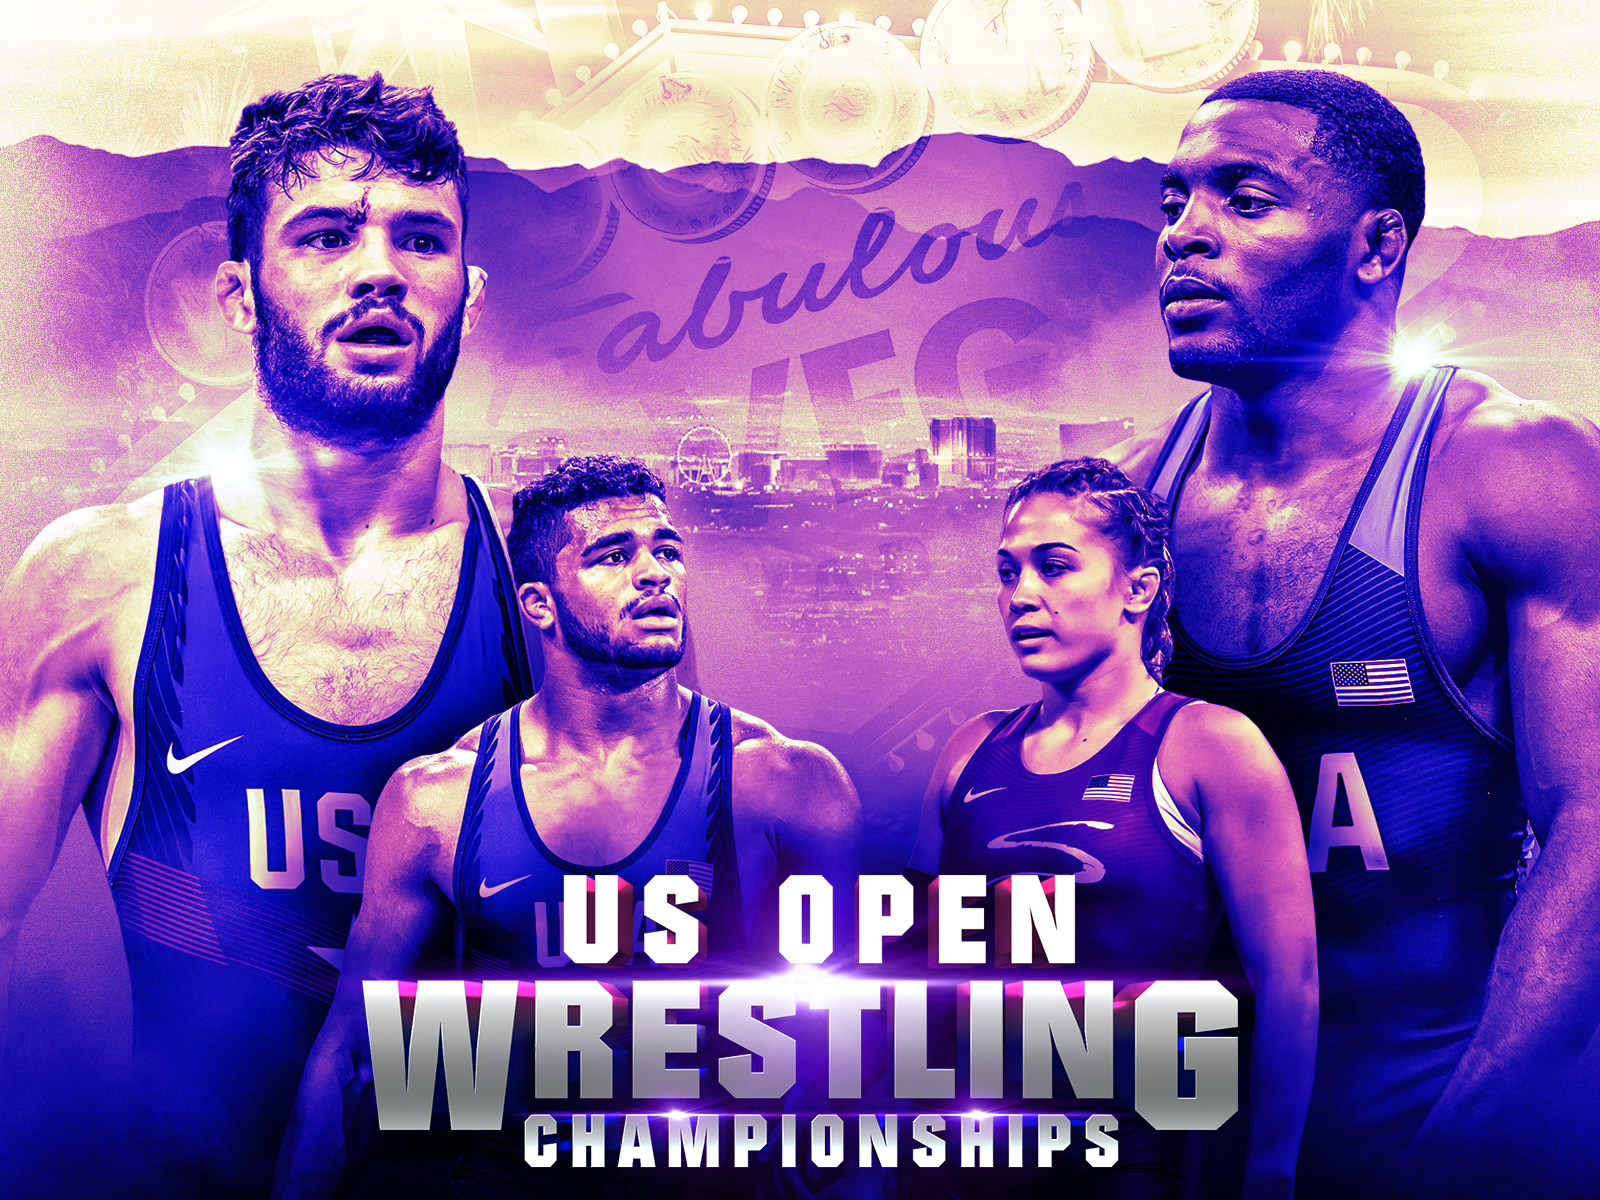 US Open Wrestling Championships by Matt Klingaman on Dribbble